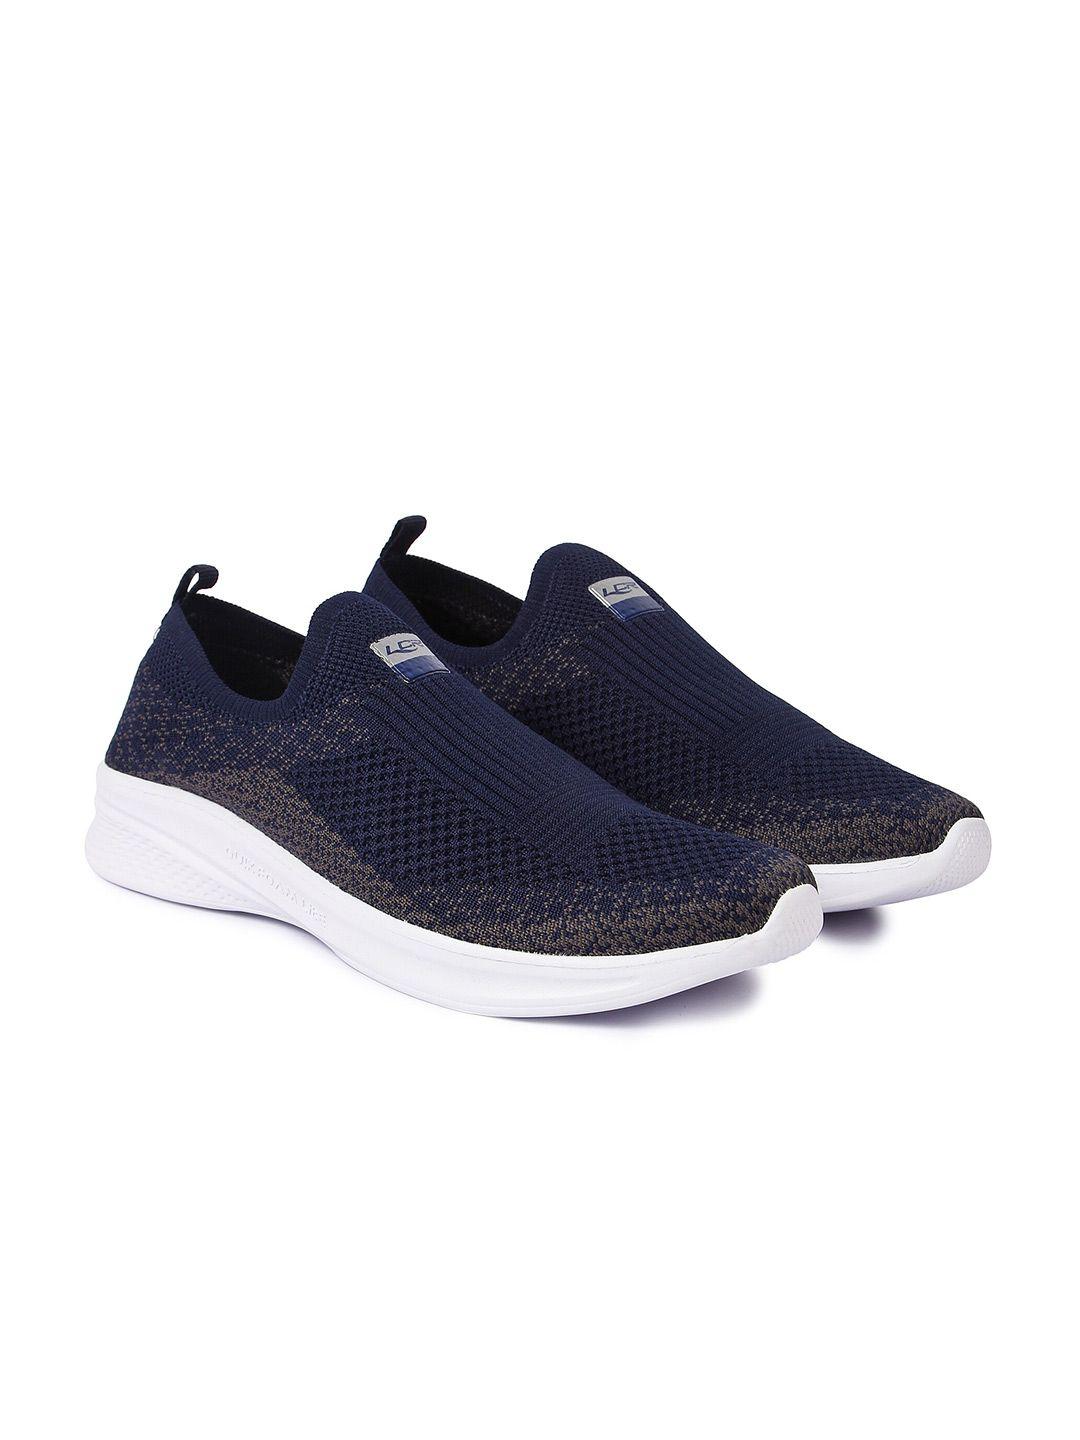 lancer-men-navy-blue-&-white-textile-running-non-marking-shoes